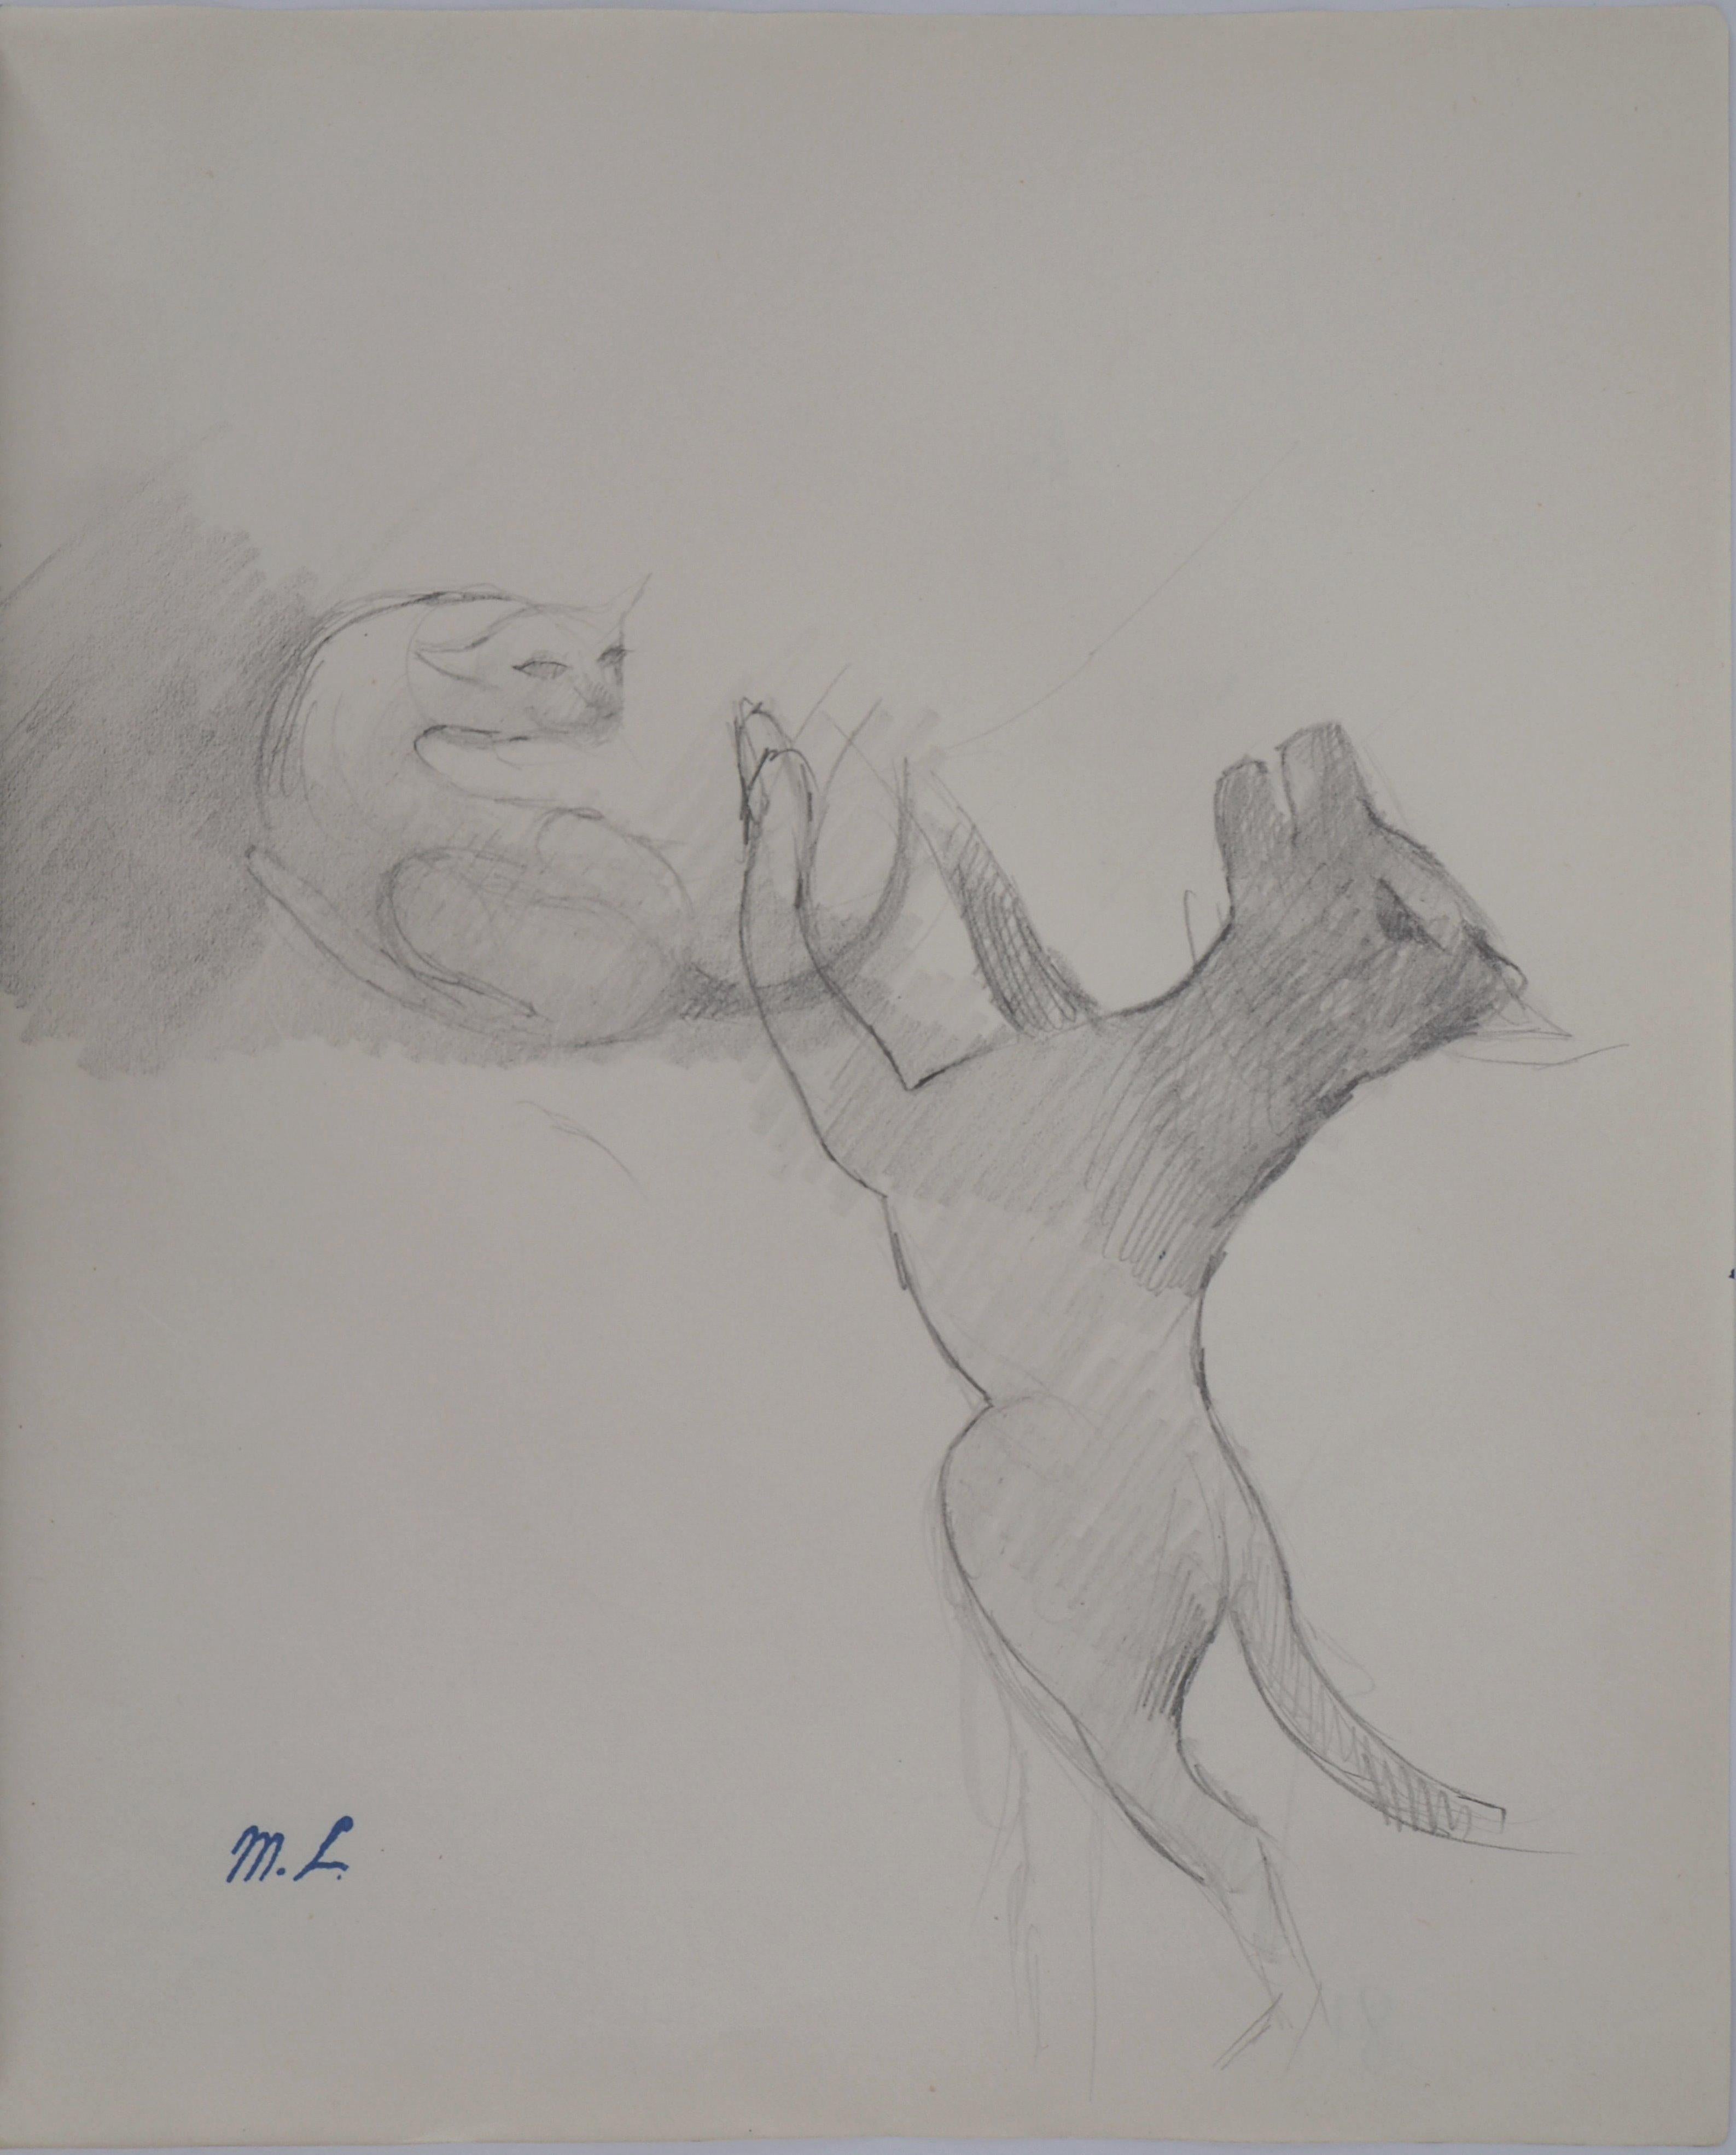 Cat and Dog Playing - Original pencil drawing, 1953